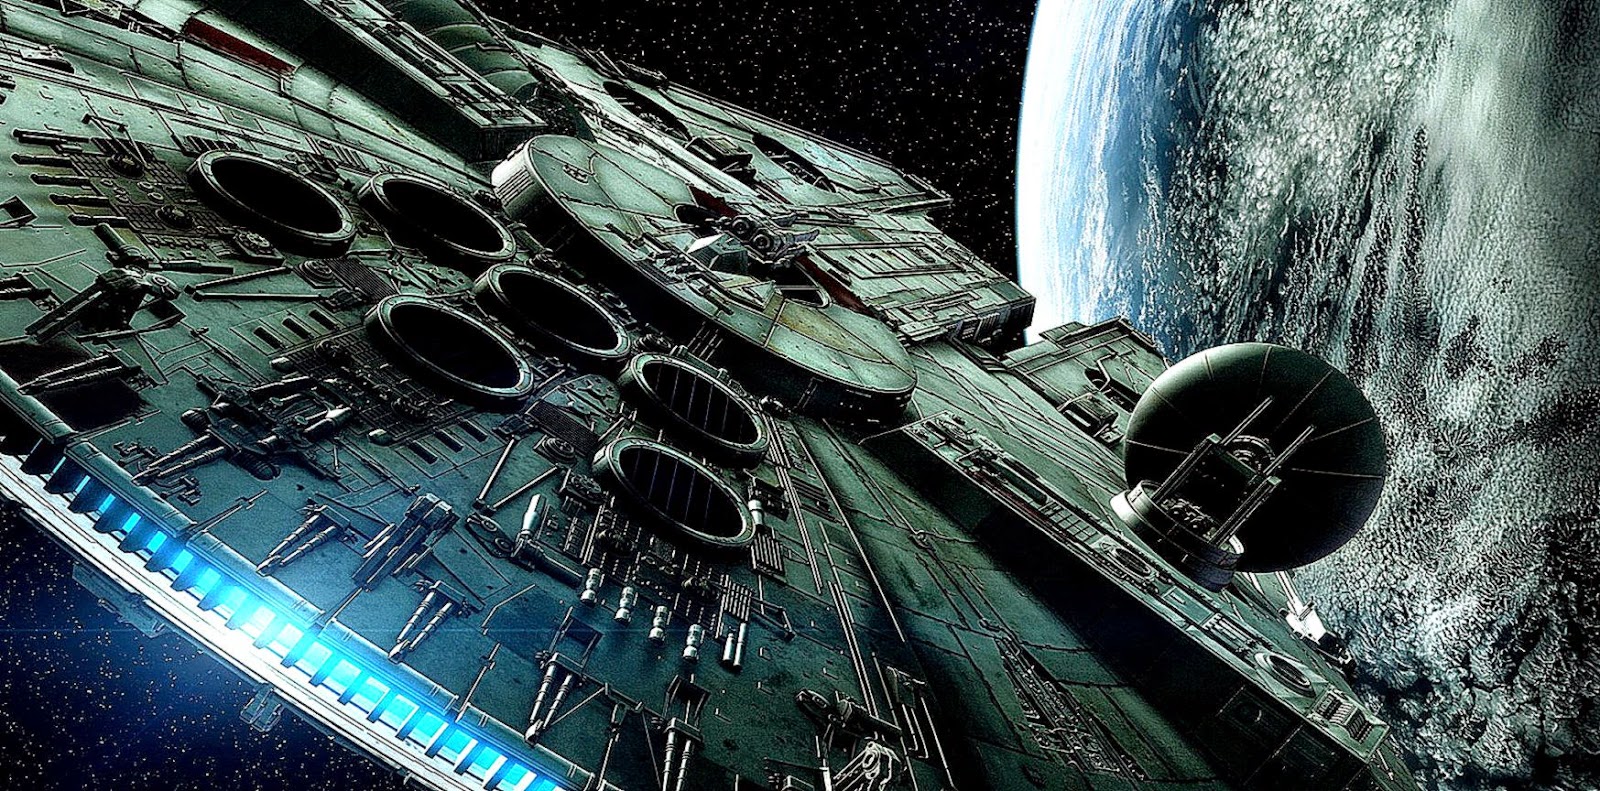 The Millenium Falcon Star Wars Wallpaper Wide HD